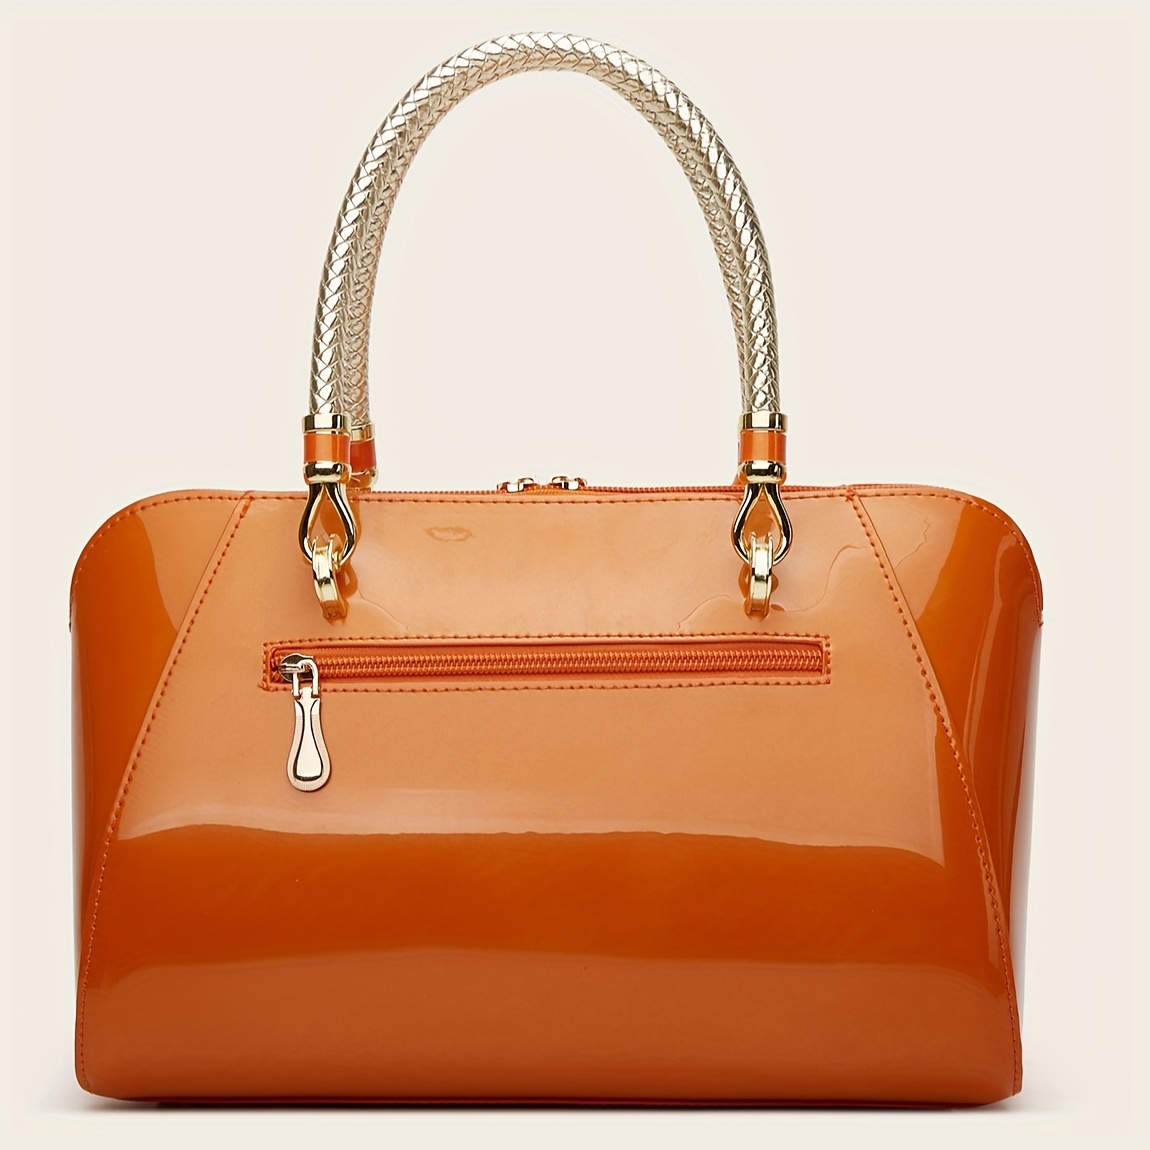  Fashion Women's Top Handle Satchel Handbags Leather